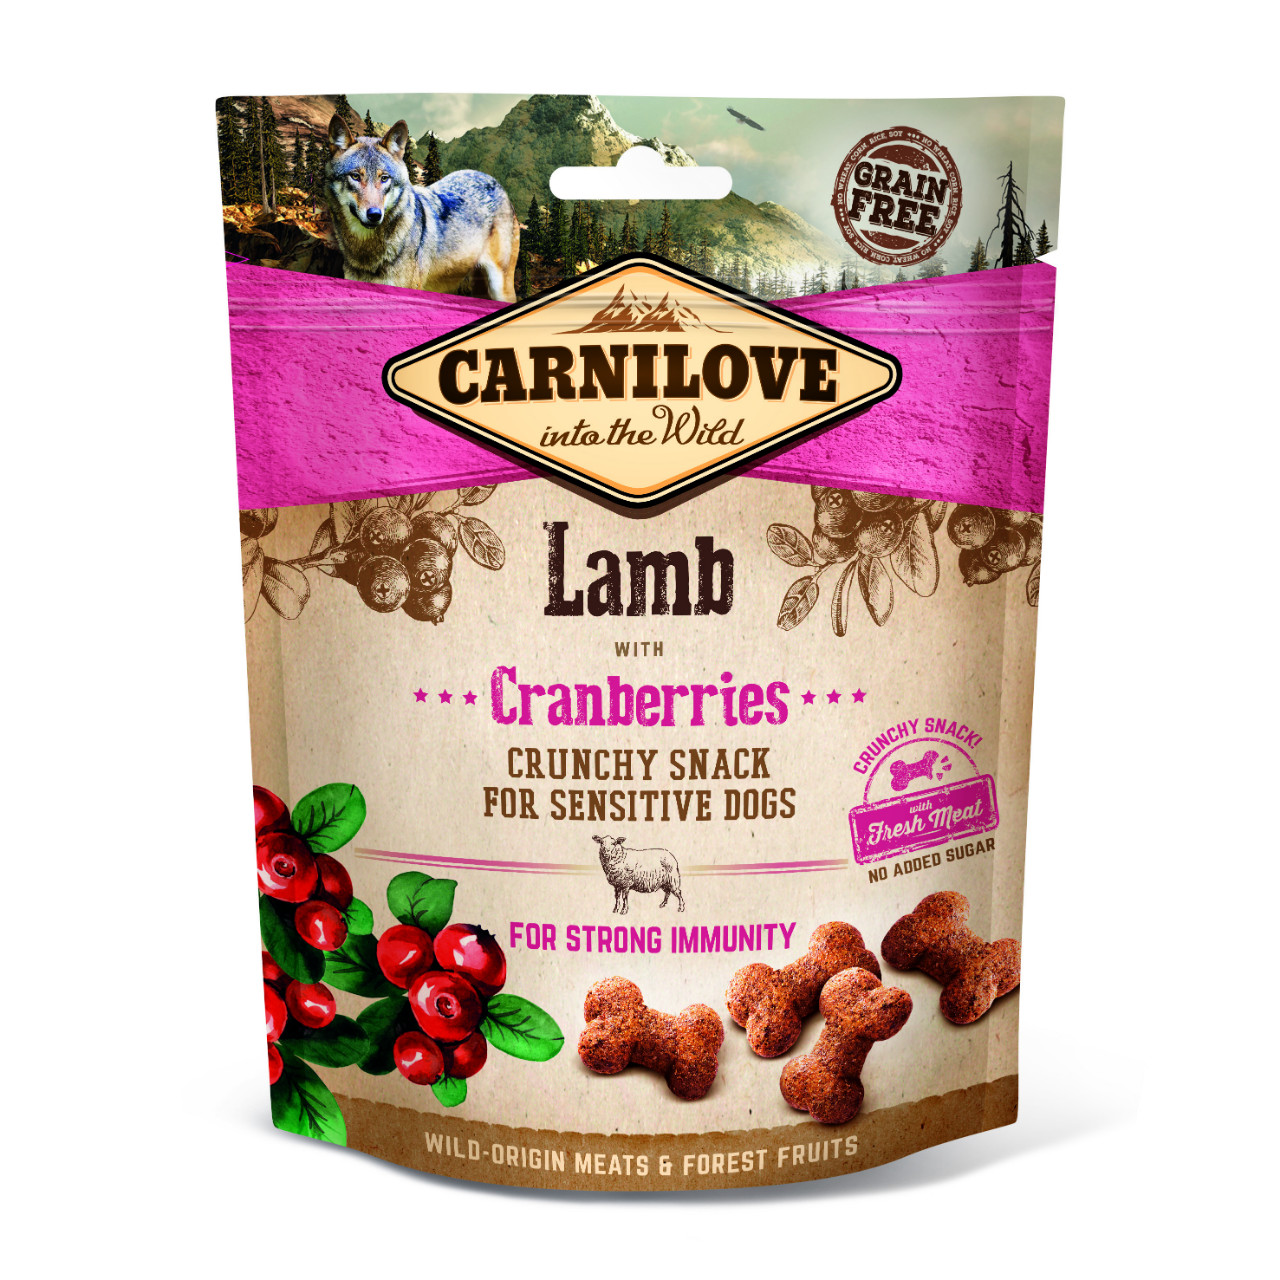 Adult Crunchy Snack - Lamm mit Cranberries 